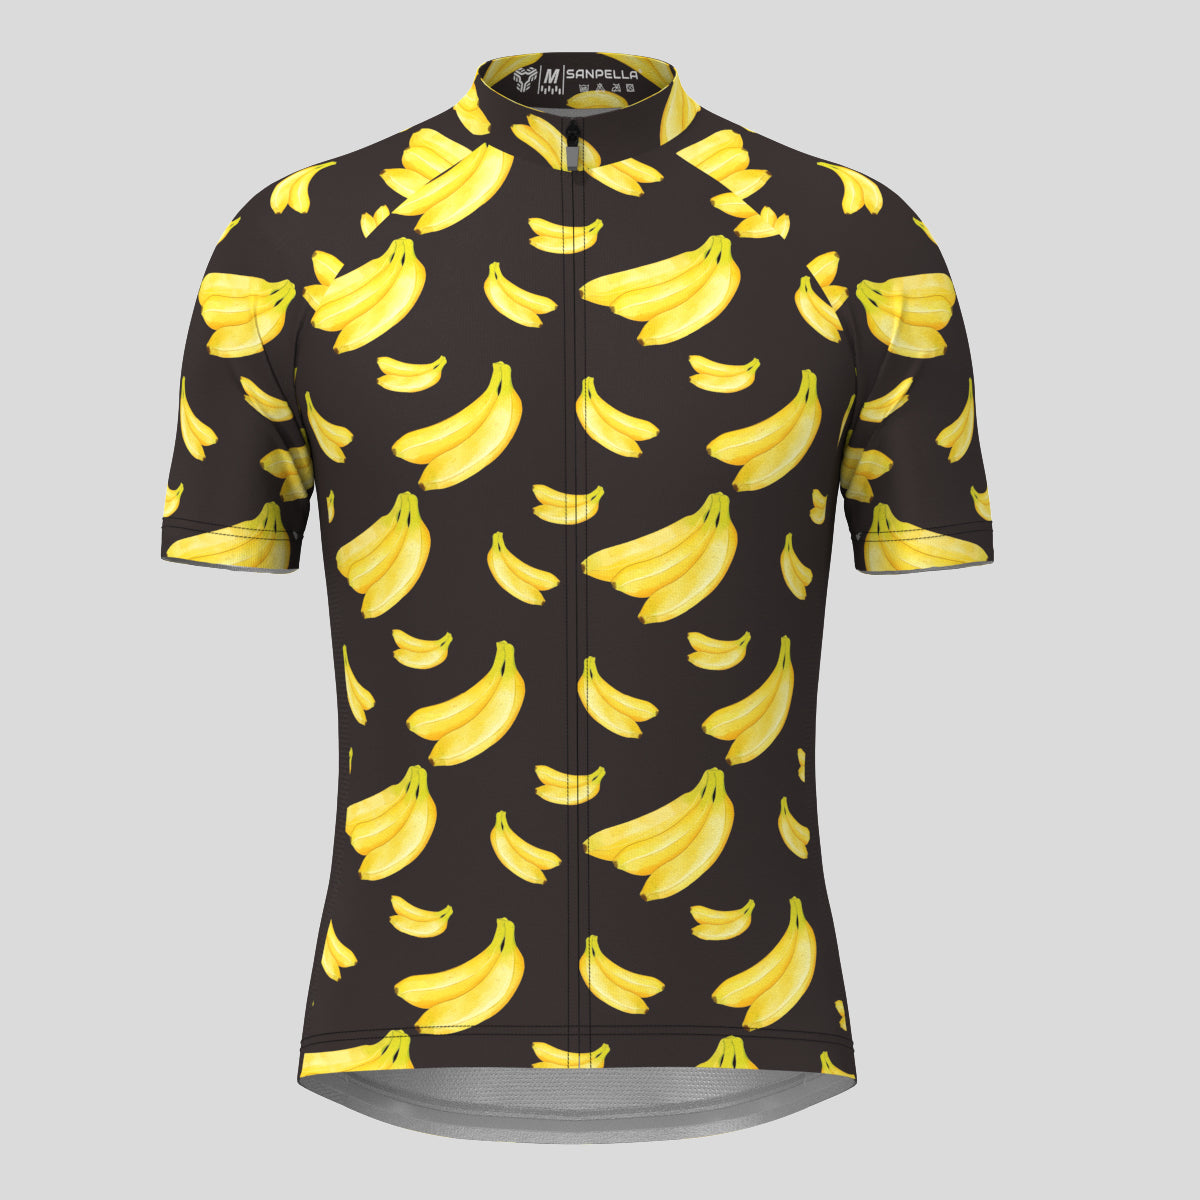 Undress Me Banana Men's Cycling Jersey